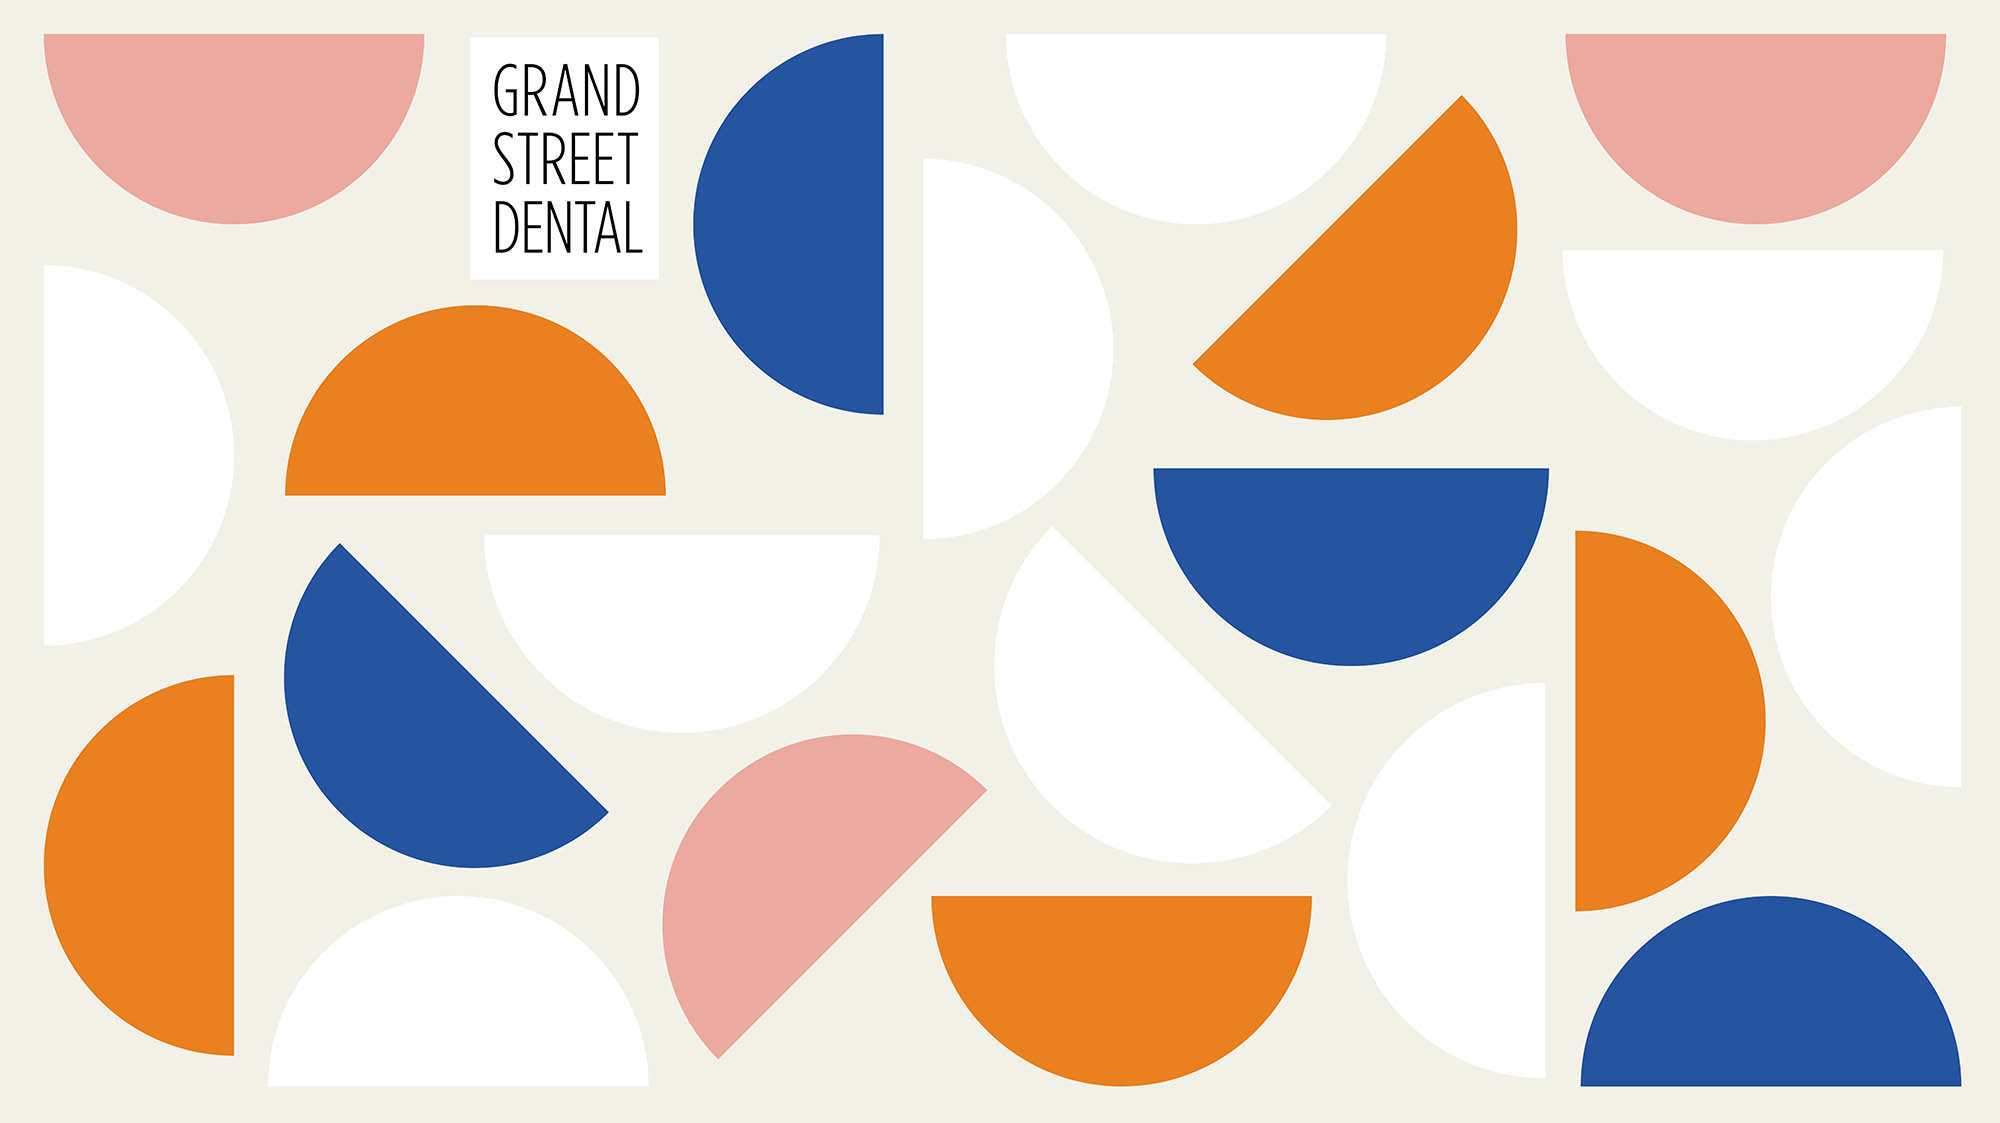 Grand Street Dental Branding - Colored Half Circle Smiles arranged in a random pattern.